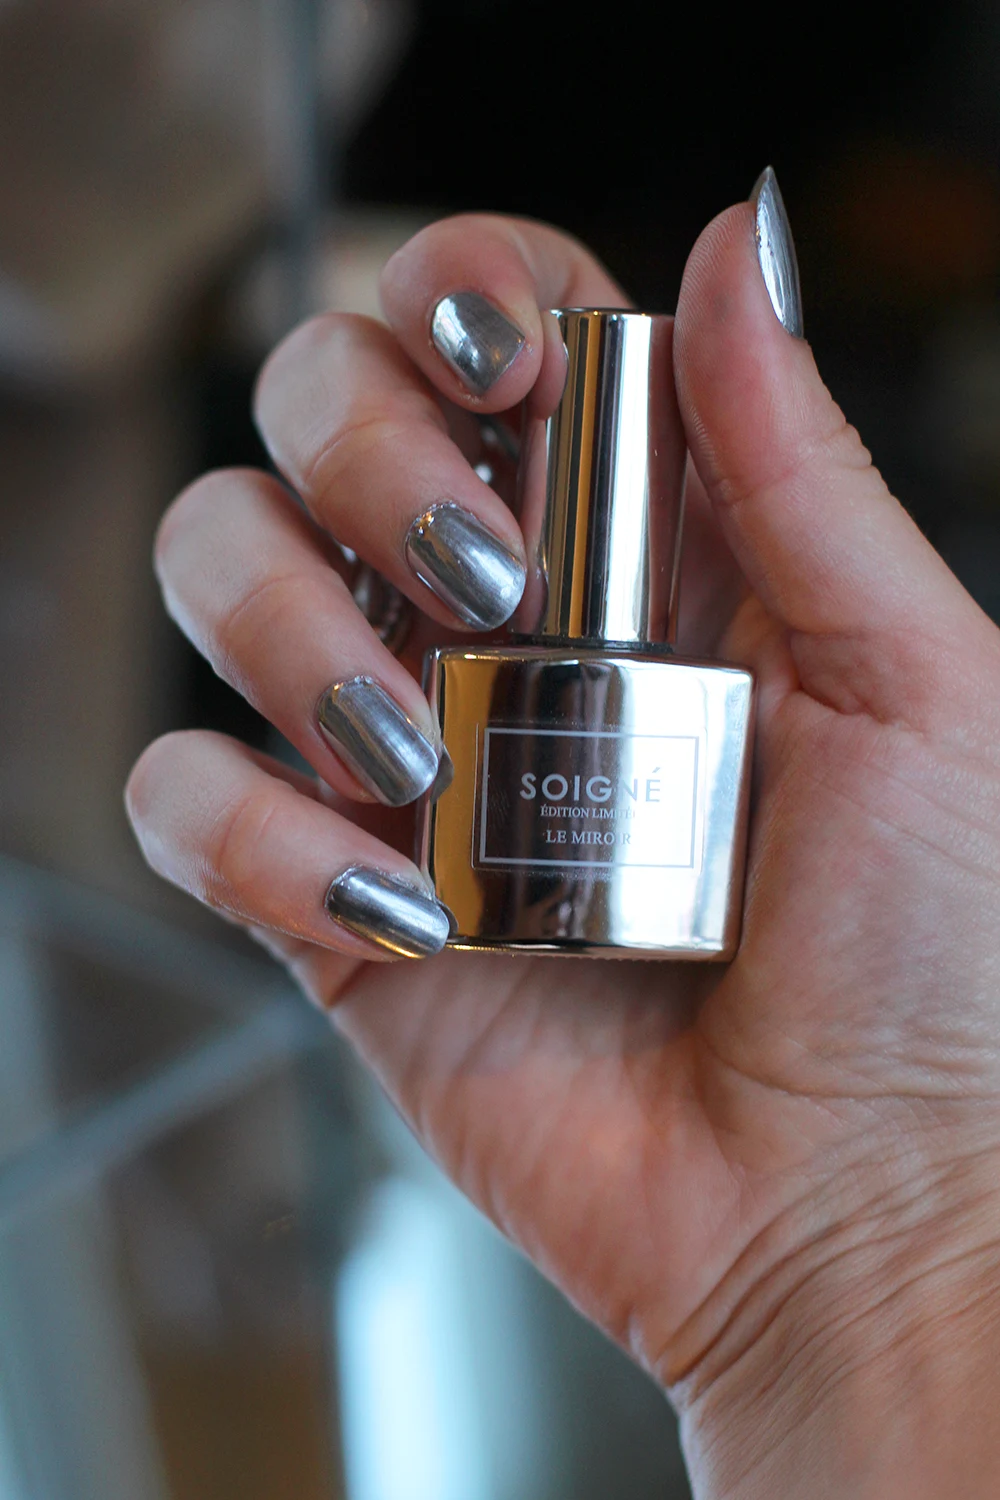 Soigne Le Miroir mirror shine nail varnish - UK beauty blog